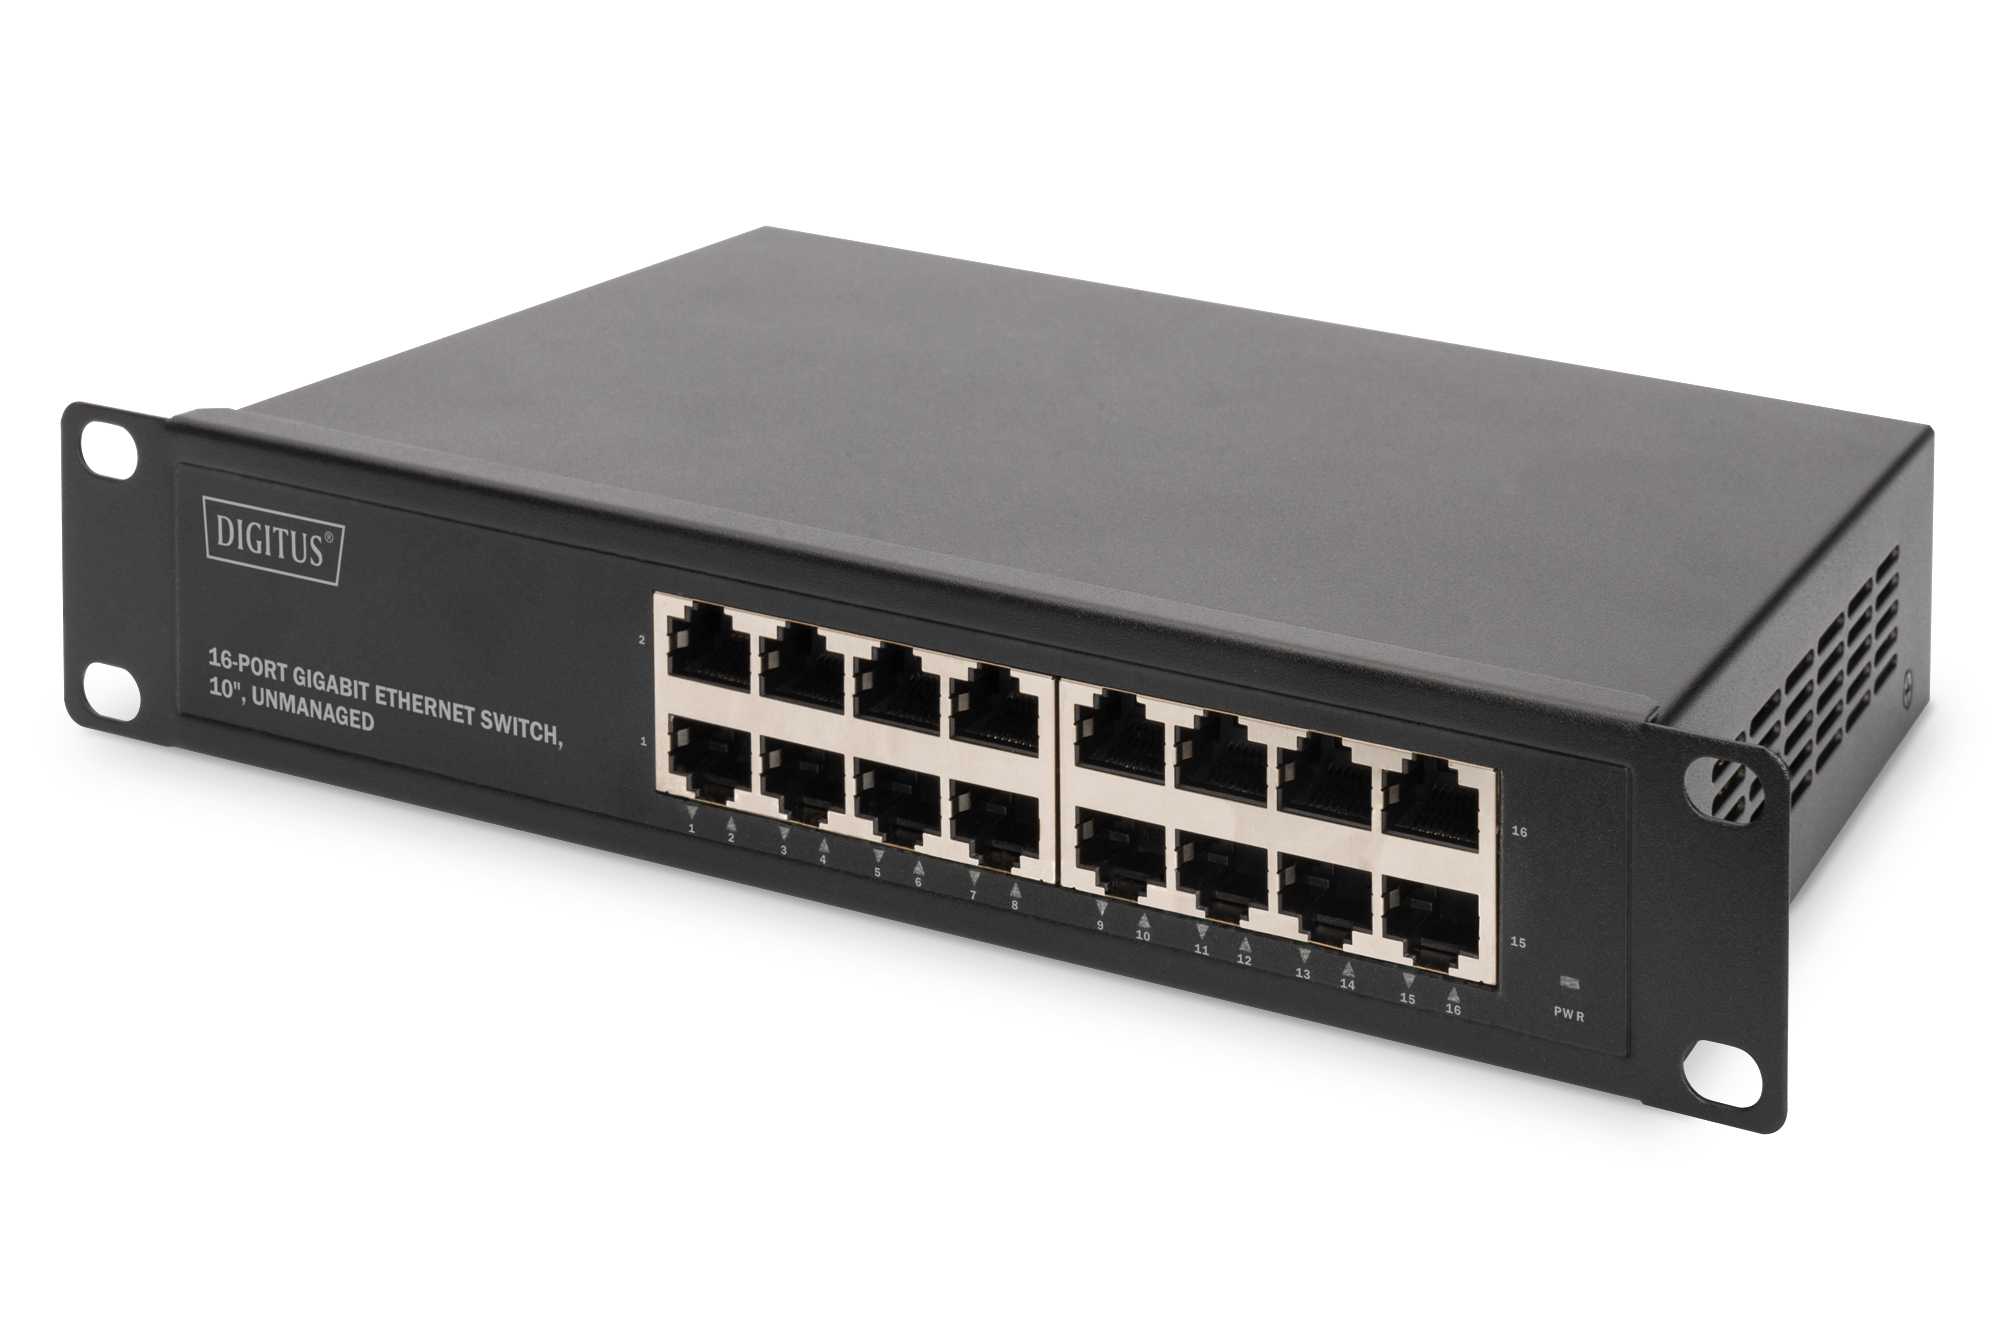 vijand Komst terug Digitus Gigabit Ethernet Switch 16-port, 10 inch, unmanaged (DN-80115)  kopen » Centralpoint